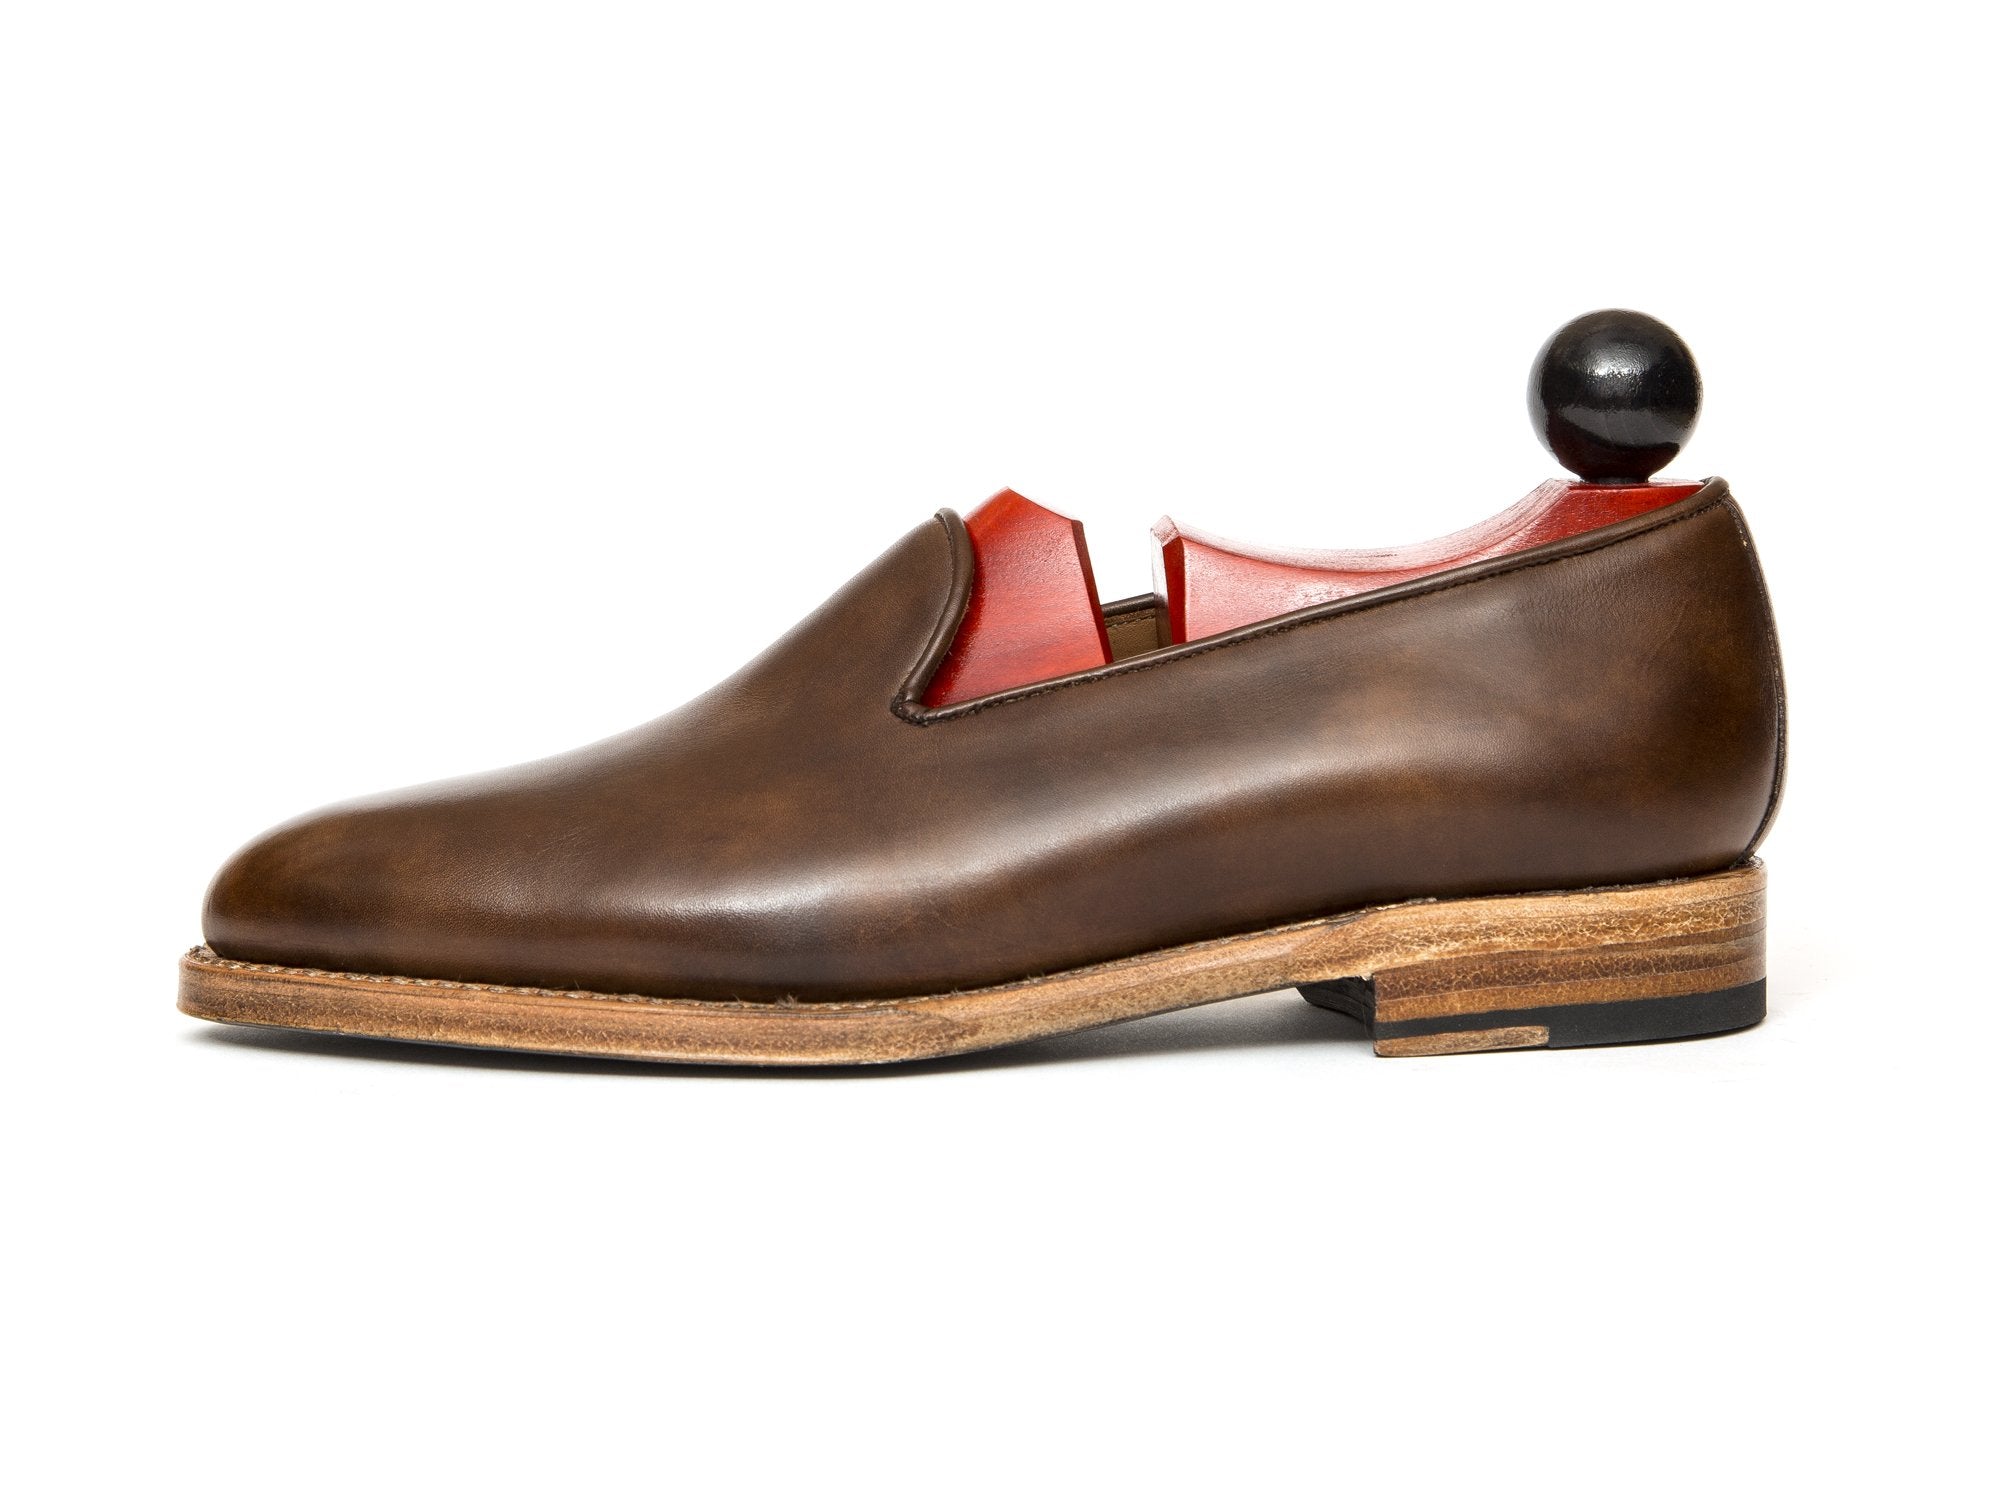 J.FitzPatrick Footwear - Laurelhurst II - Copper Museum Calf - TMG Last - Natural Sole